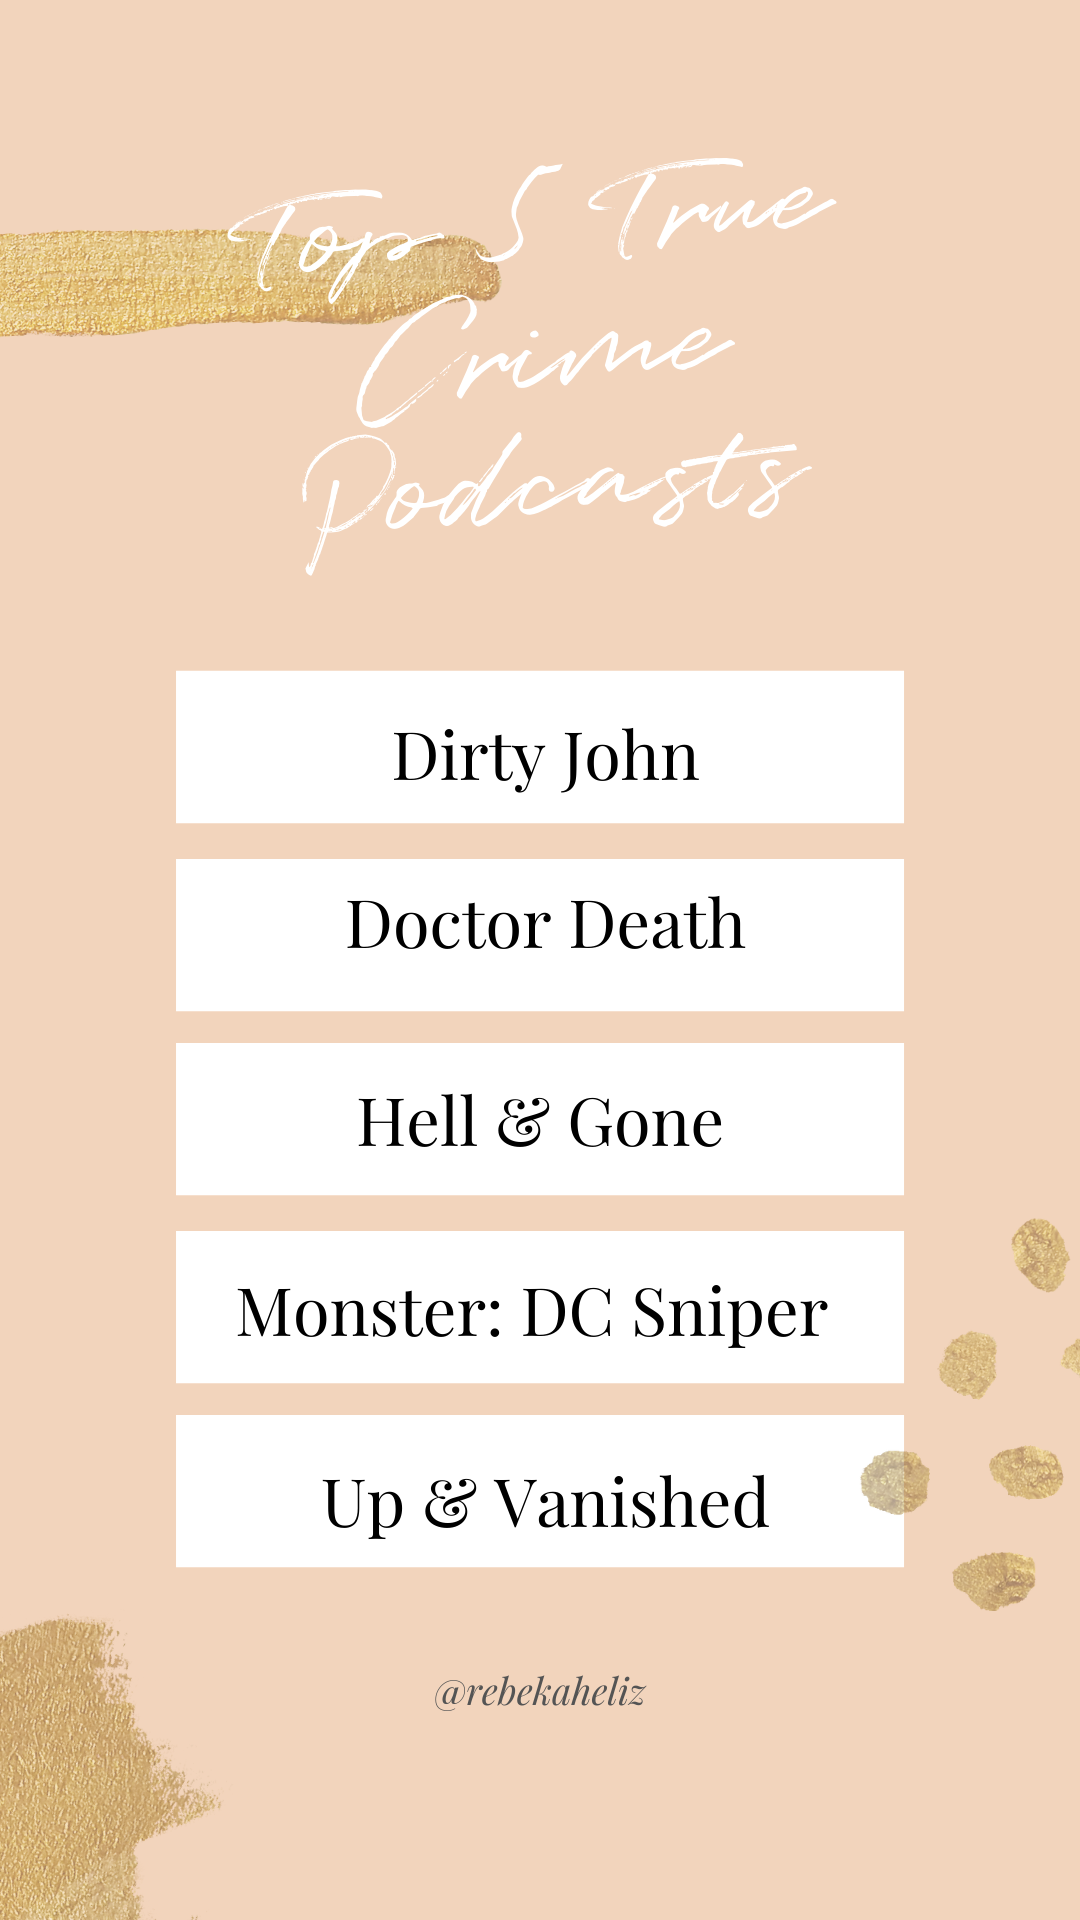 true crime podcasts, podcasts, true crime, dirty John, doctor death, hell & gone, monster: DC sniper, up & vanished